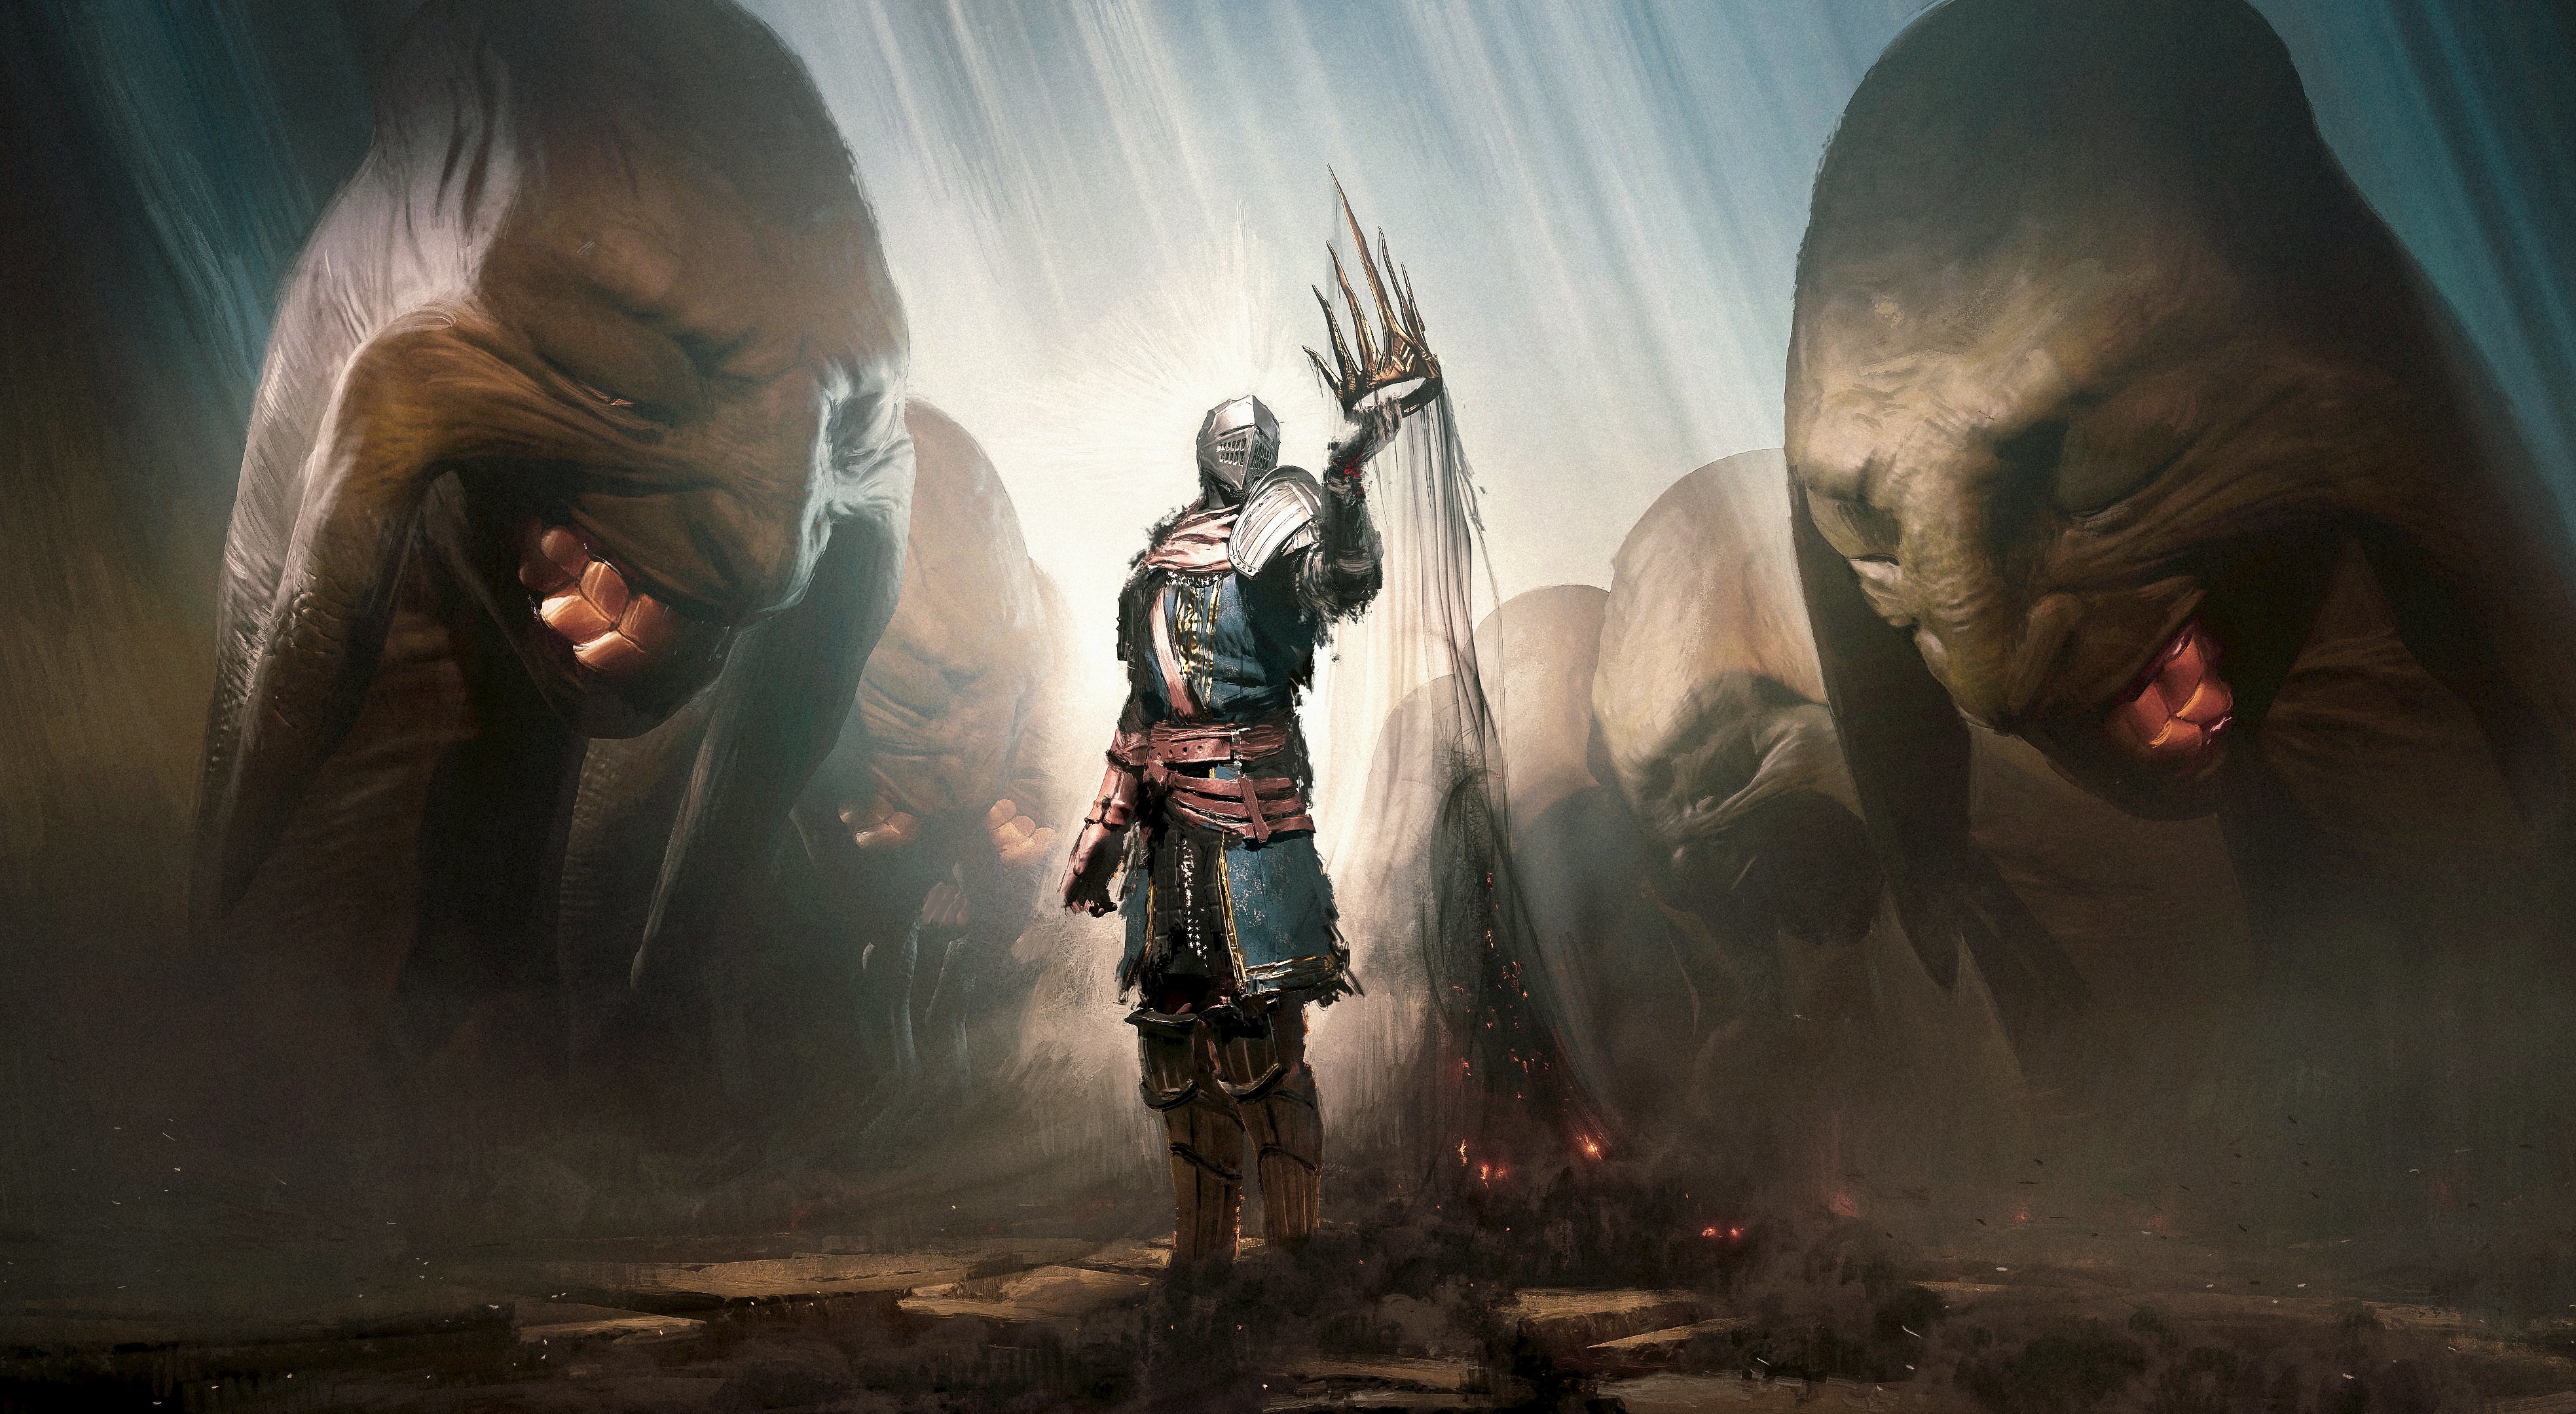 Dark Souls Gaming Digital Art Wallpaper, HD Games 4K Wallpapers, Images,  Photos and Background - Wallpapers Den